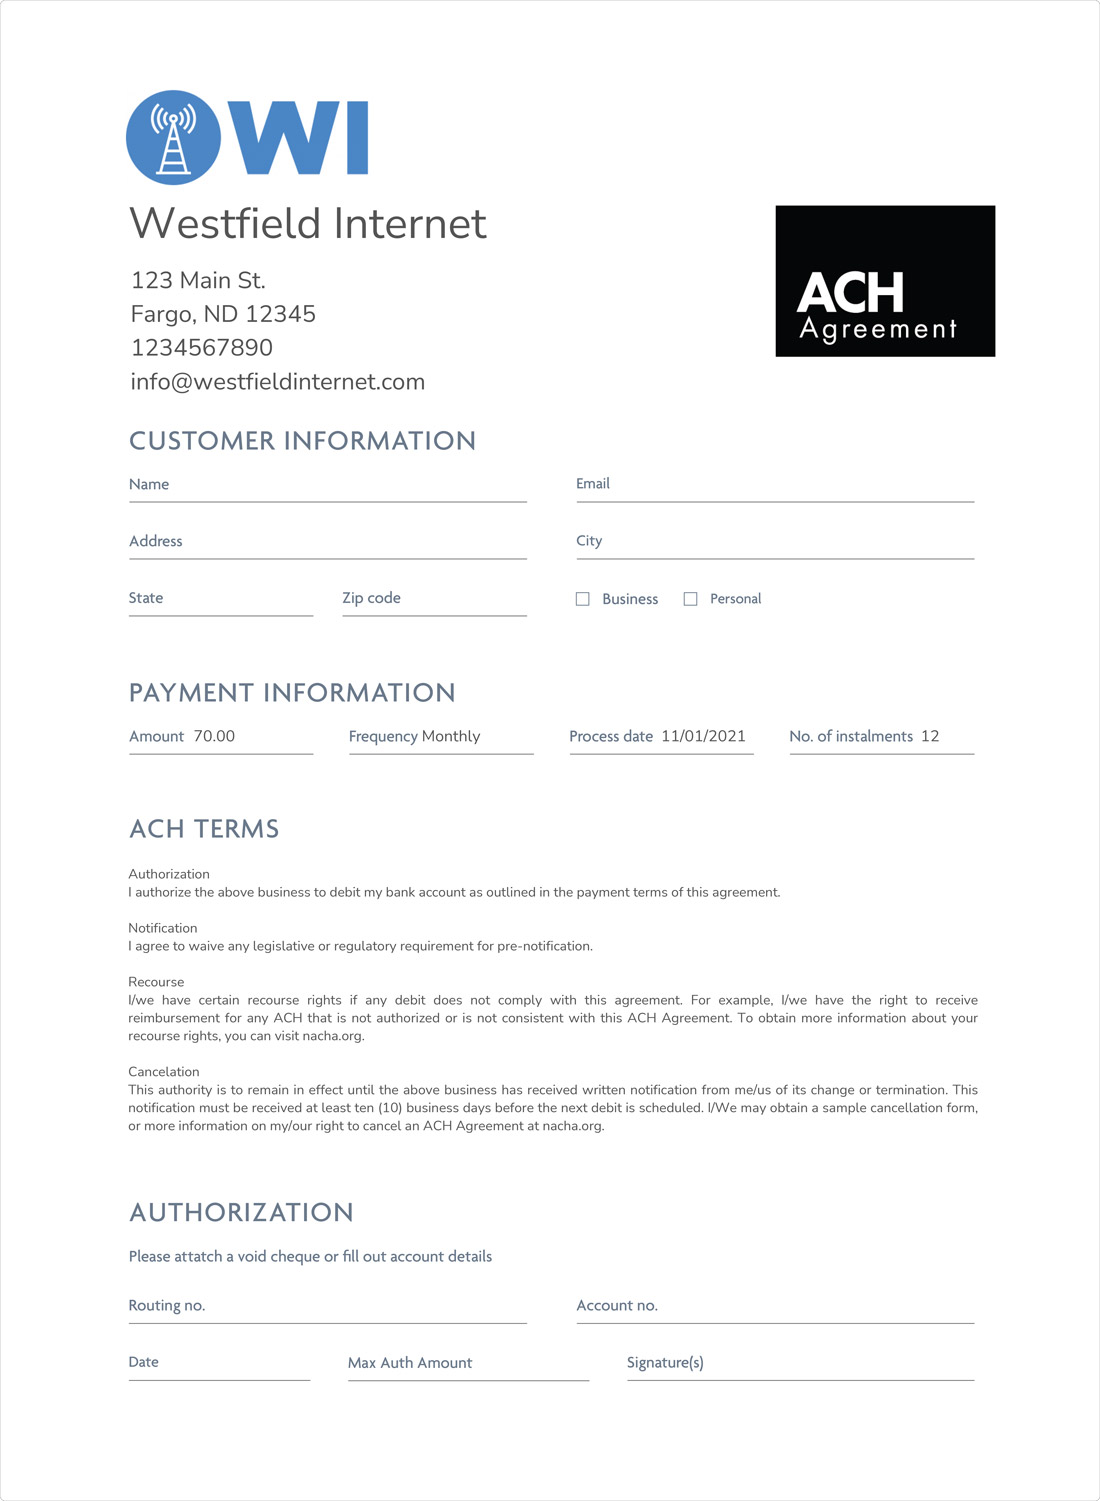 ACH authorization form sample image - internet service provider